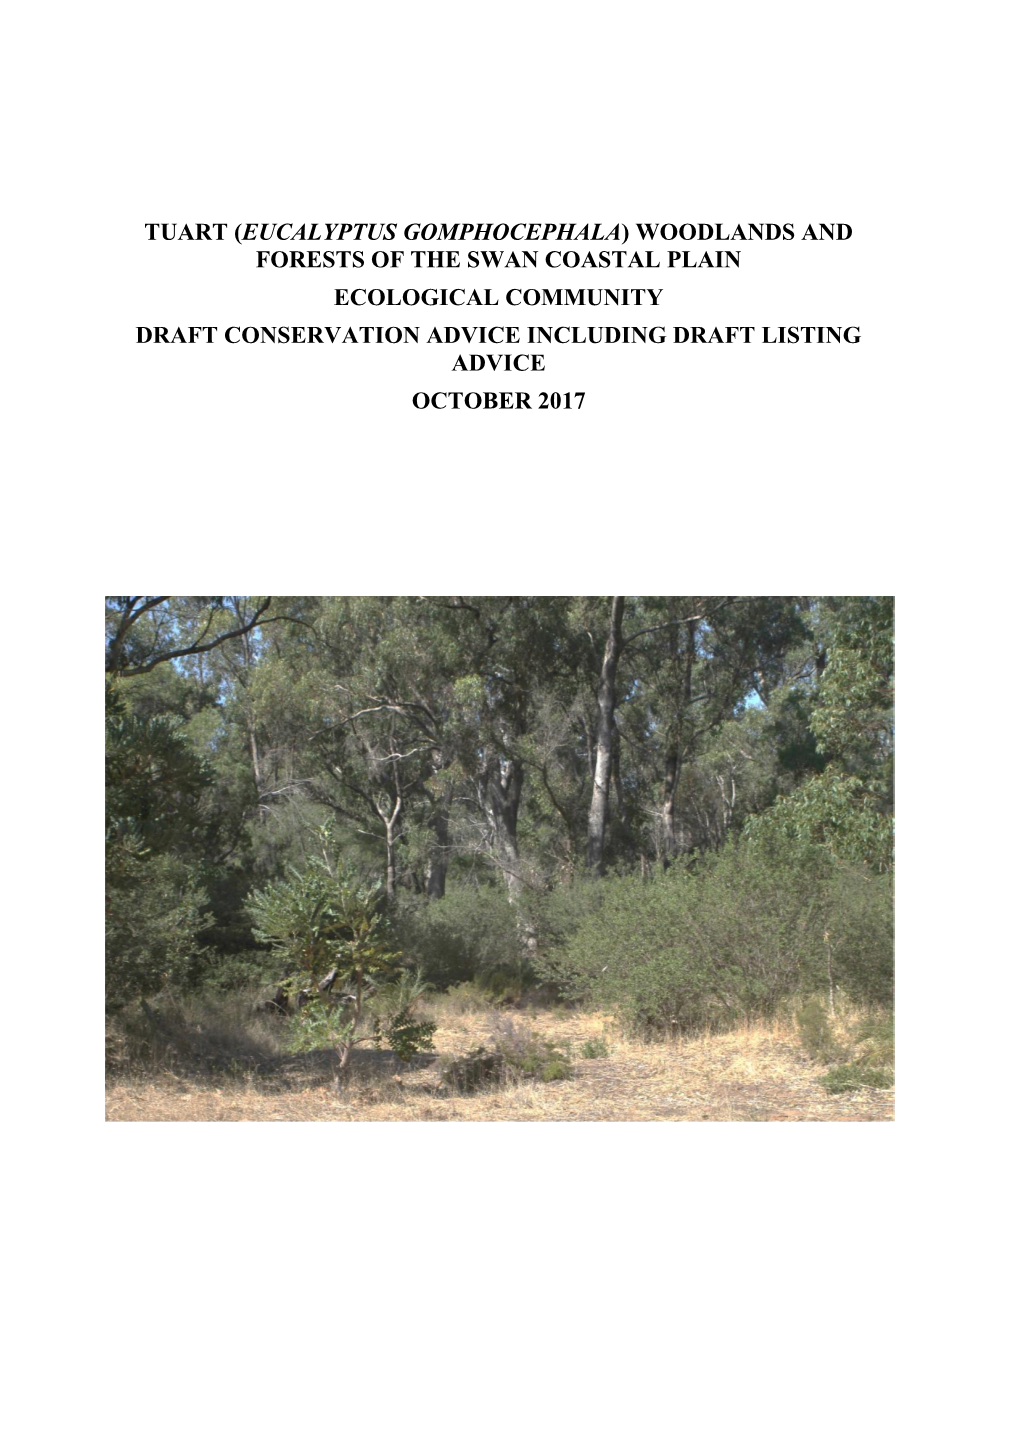 Draft Conservation Advice Including Draft Listing Advice Tuart (Eucalyptus Gomphocephala) Woodlands and Forests of the Swan Coas